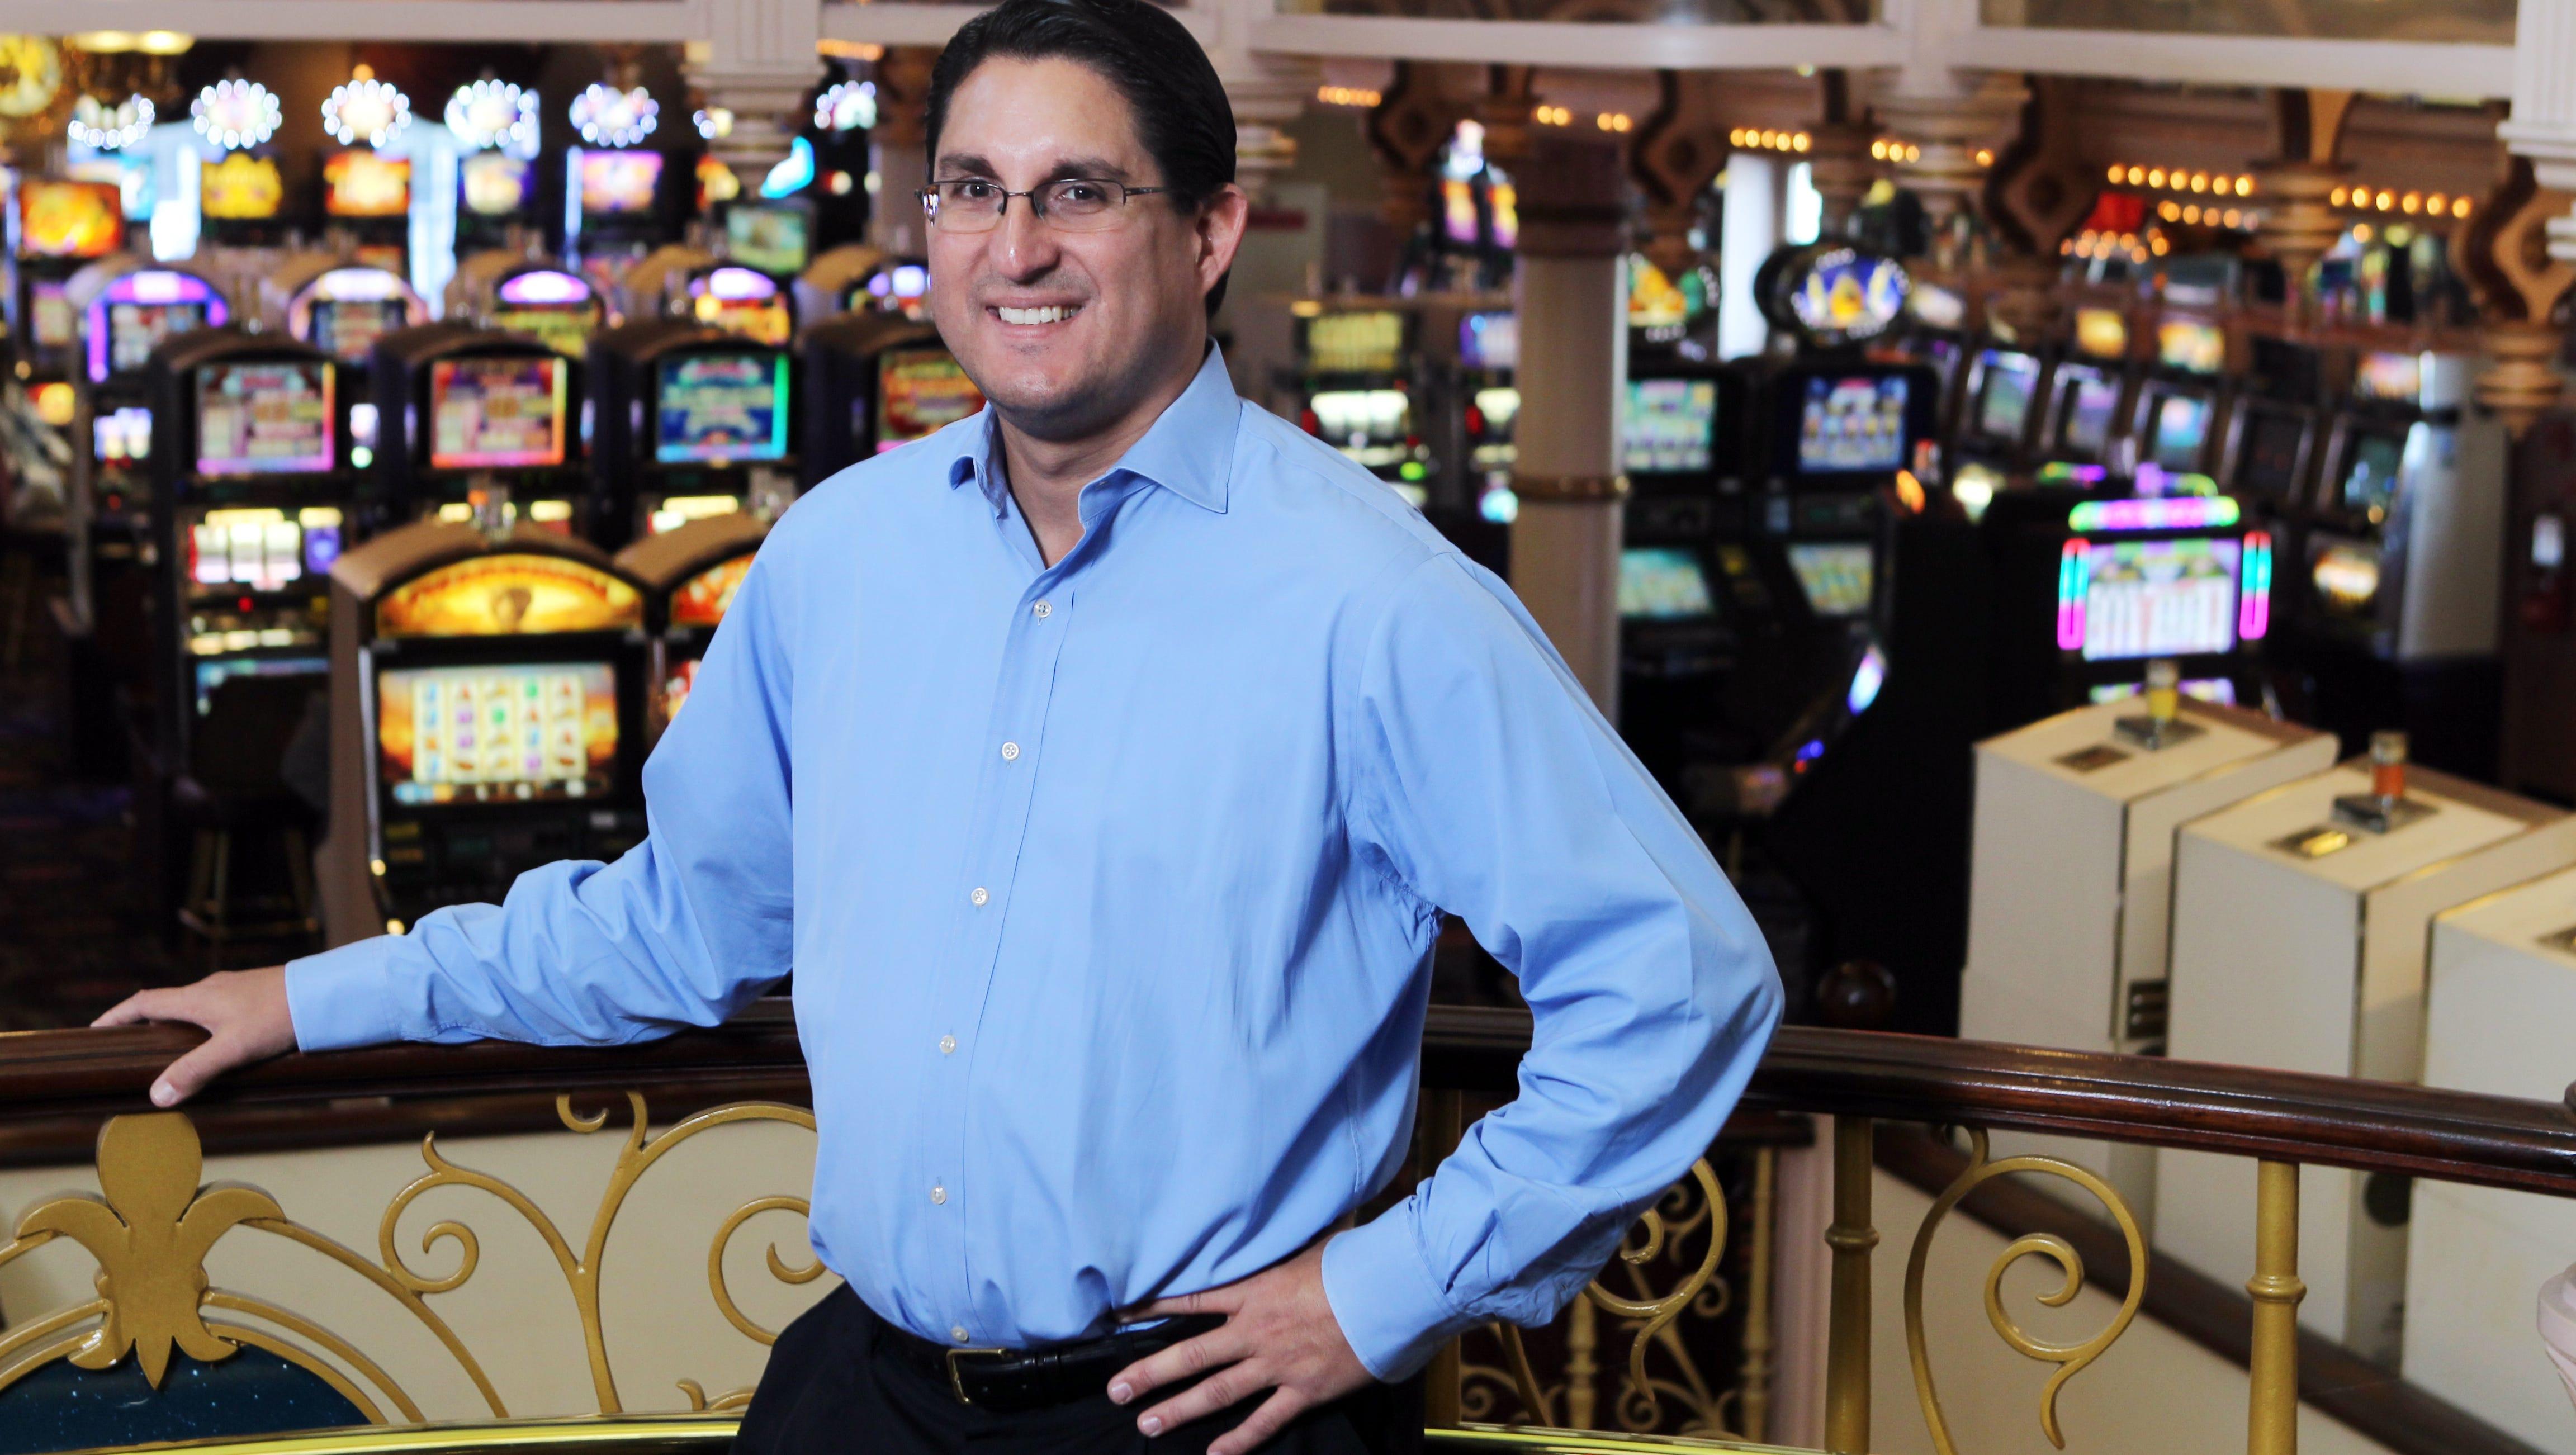 Steve Jimenez, general manager of Rising Star Casino, Rising Sun, Indiana, in the casino.